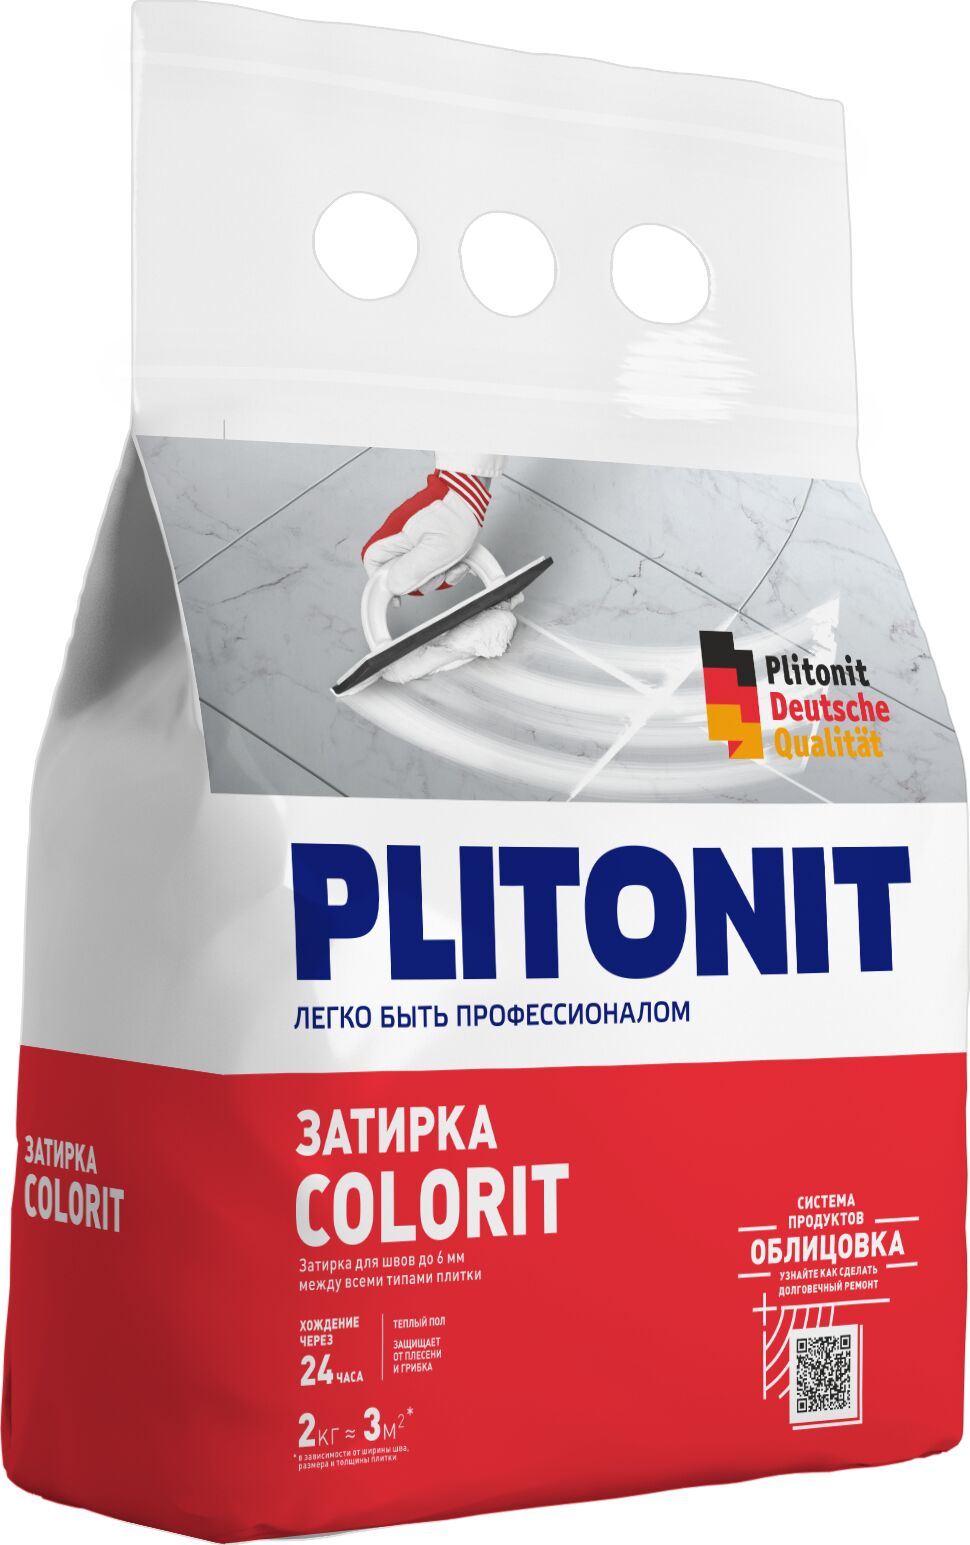 PLITONIT Colorit затирка между всеми типами плитки (1,5-6 мм) КРЕМОВАЯ -2 , PLITONIT Colorit затирка между всеми типами плитки (1,5-6 мм) КРЕМОВАЯ -2 